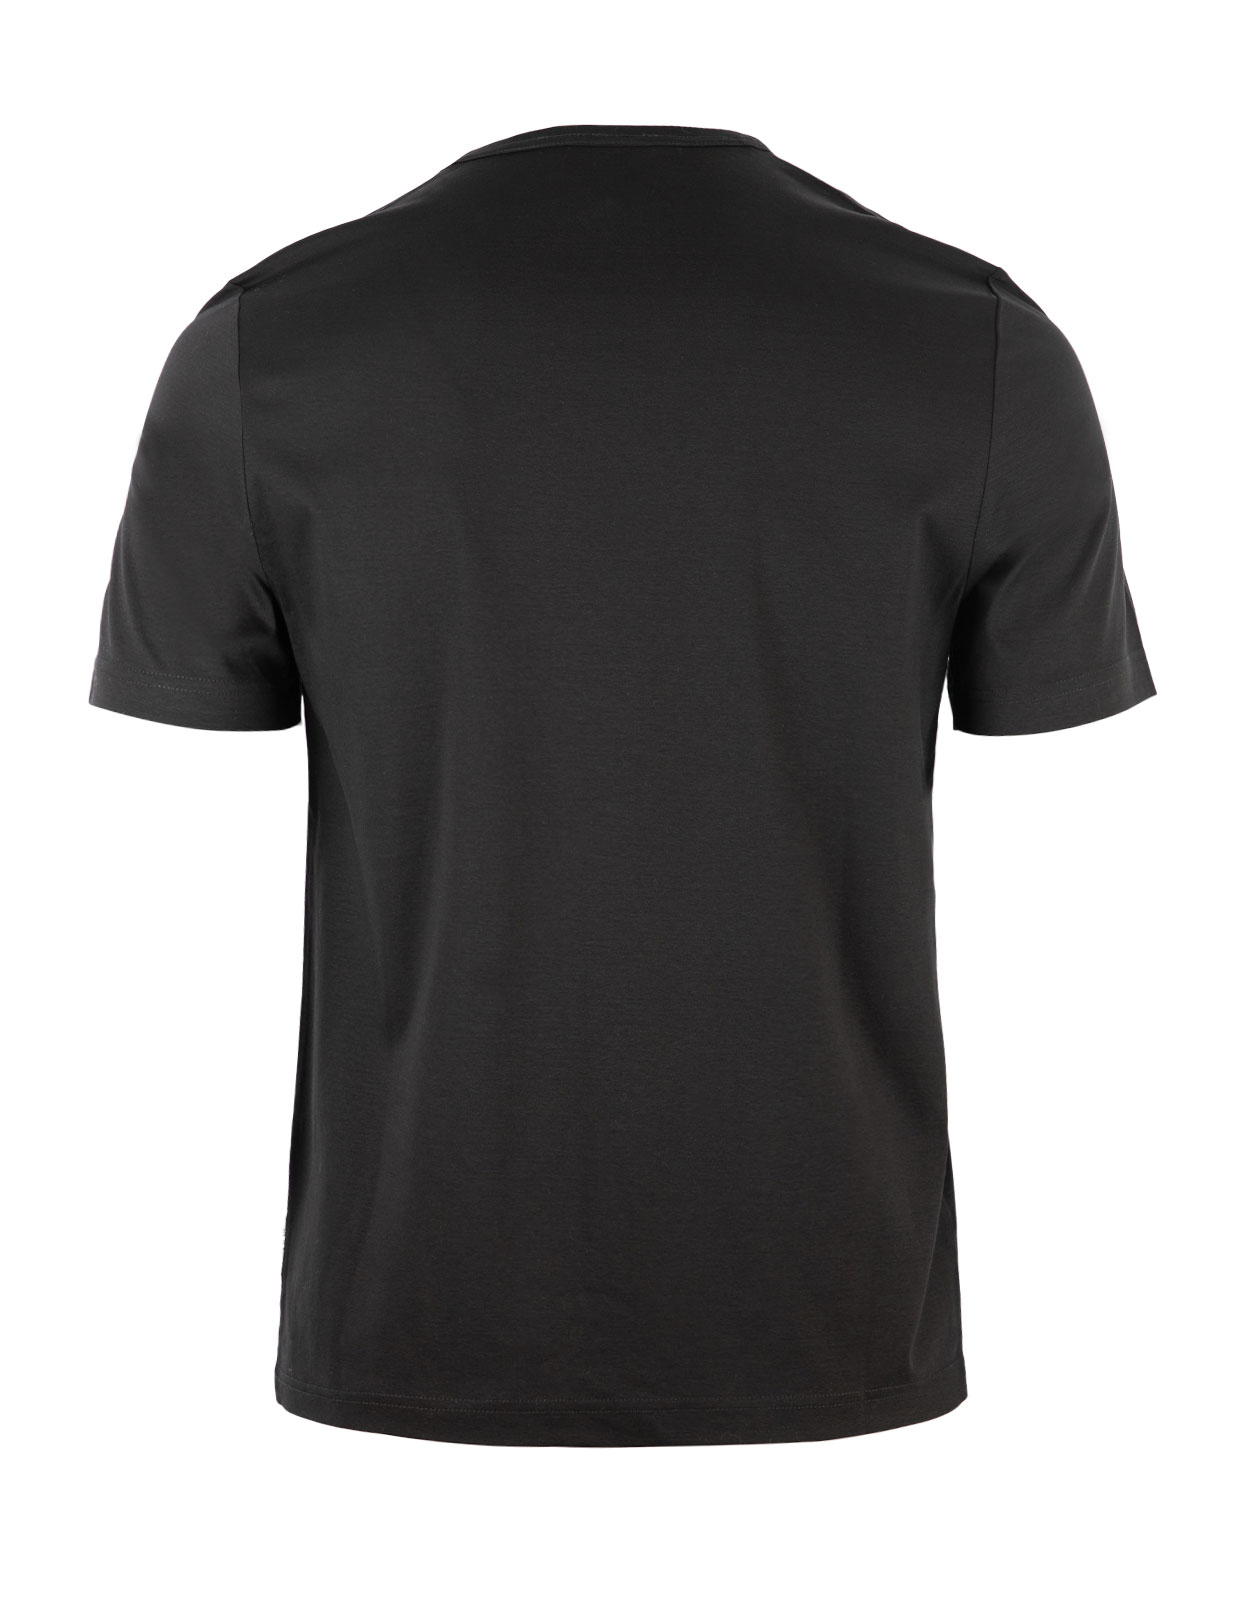 Olaf T-Shirt Black